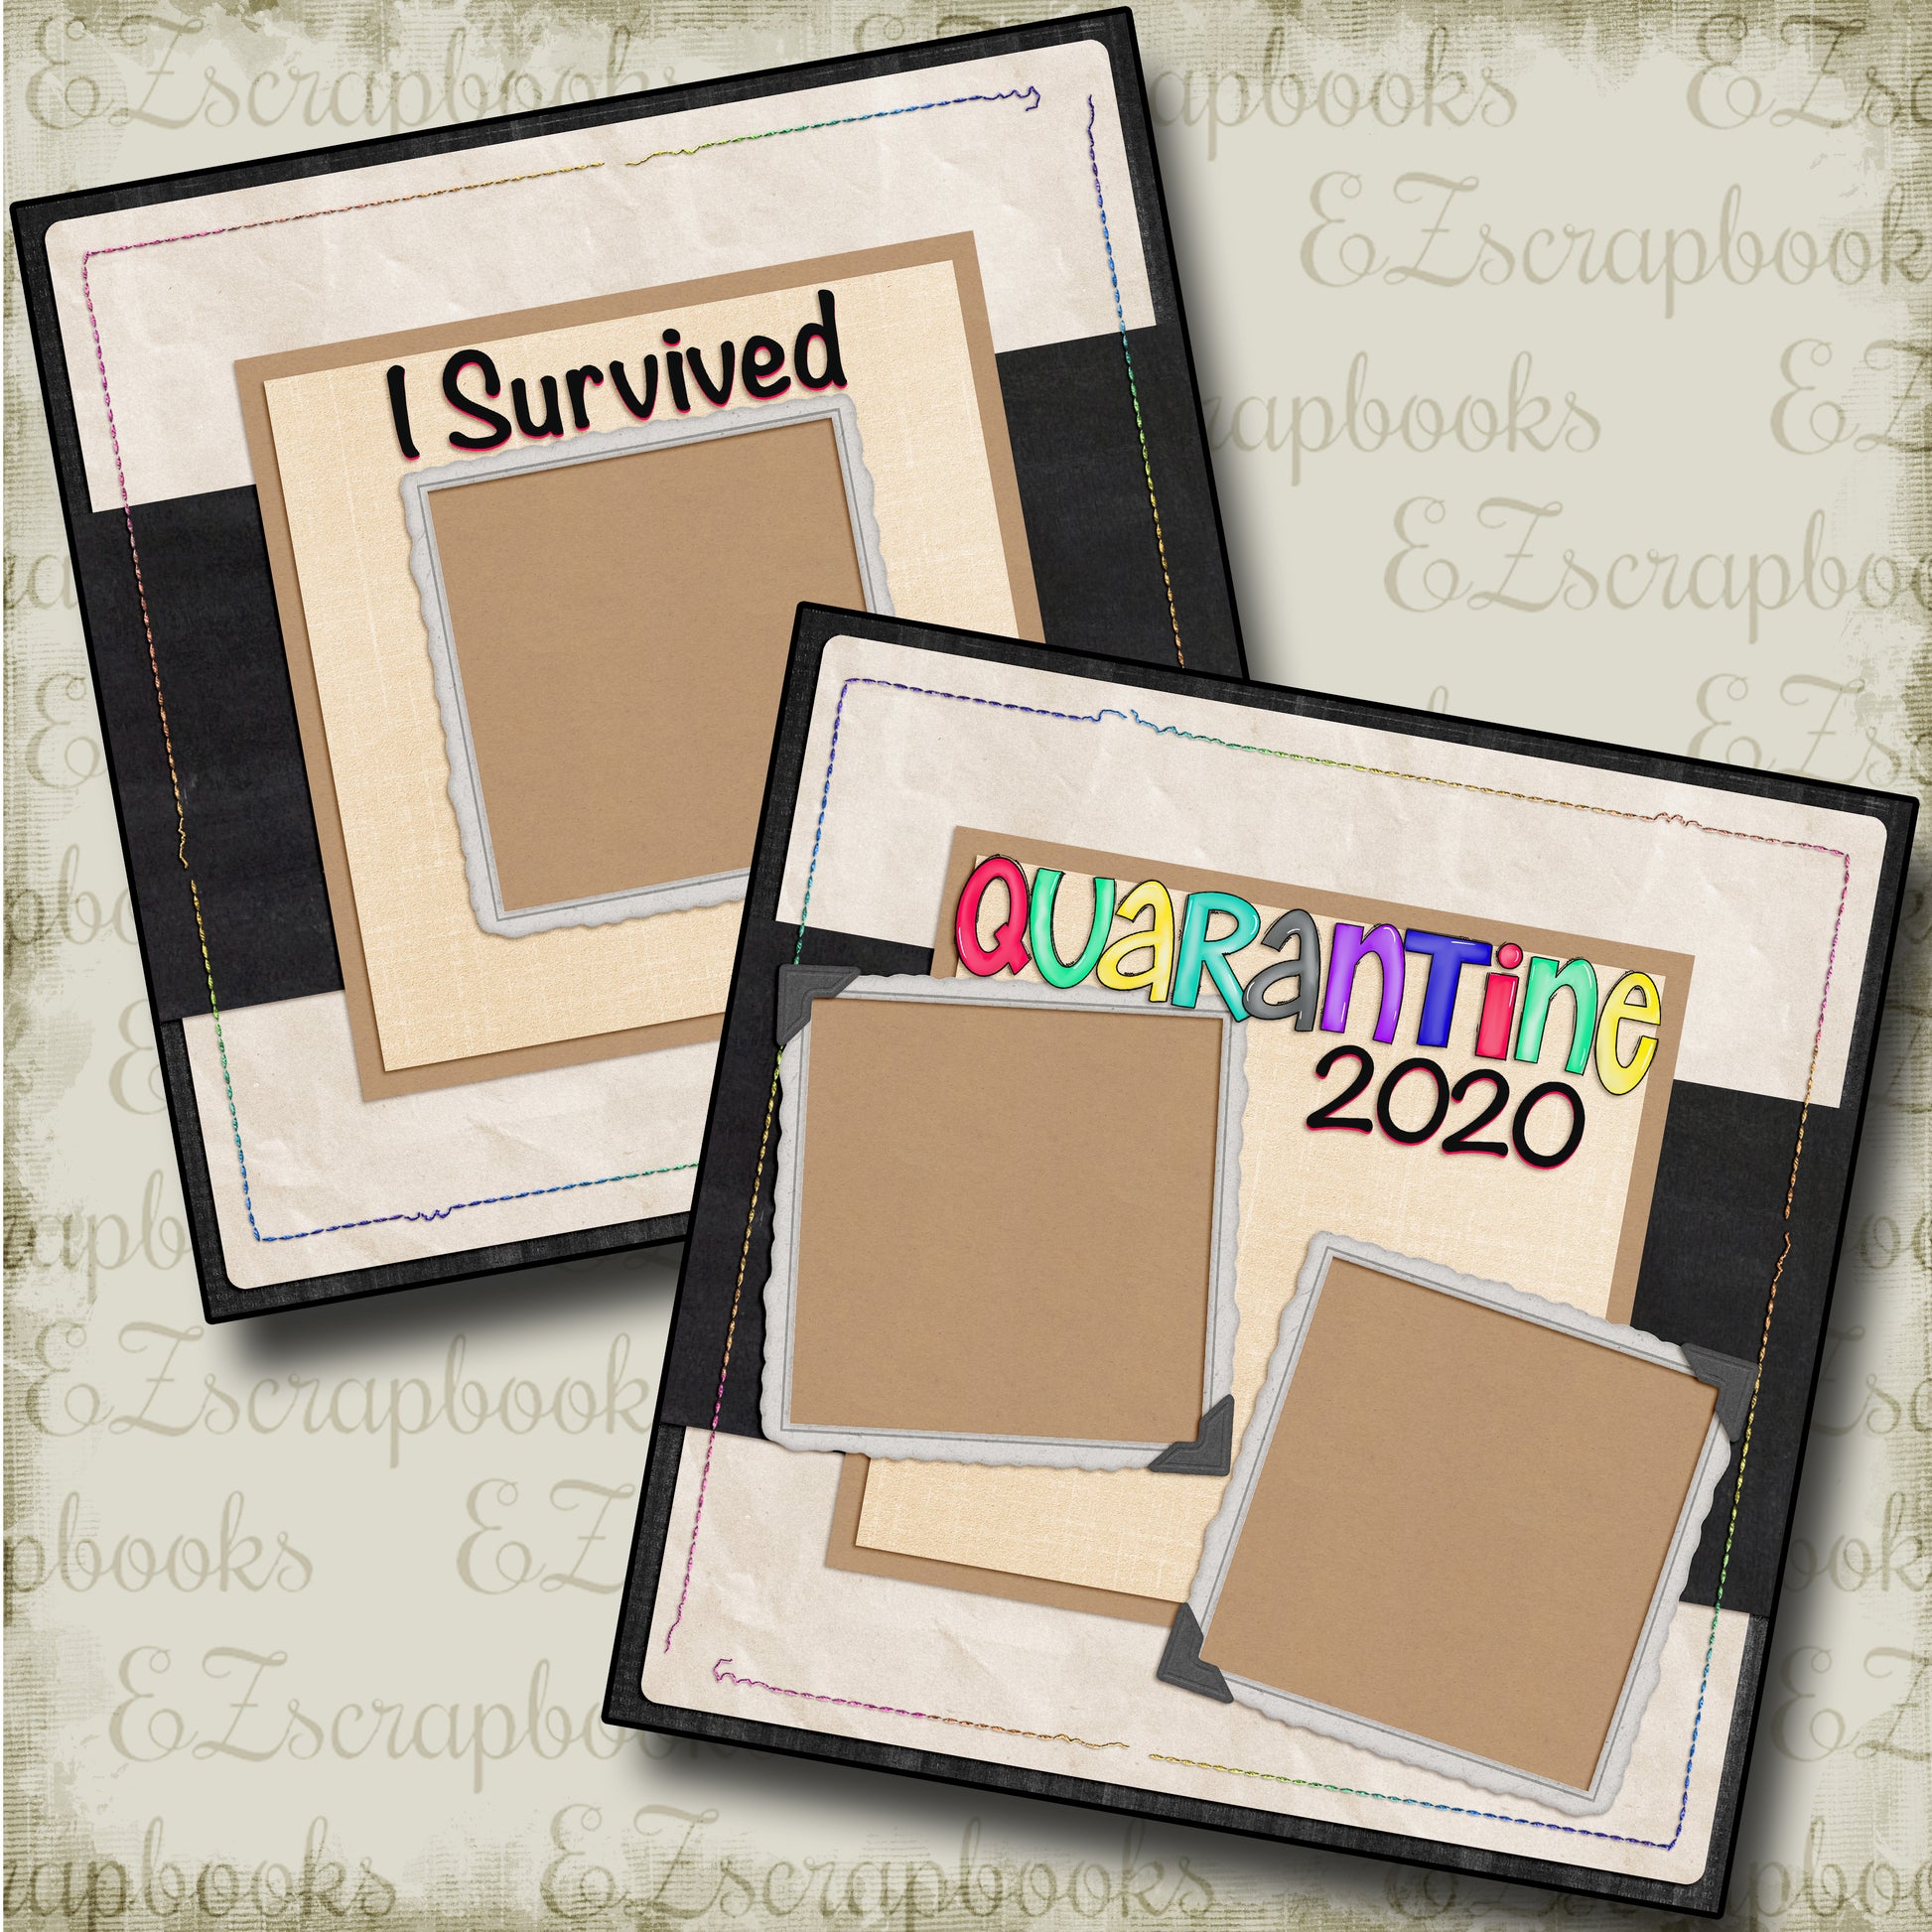 I Survived Quarantine 2020 - 4712 - EZscrapbooks Scrapbook Layouts covid, Quarantine-Corona